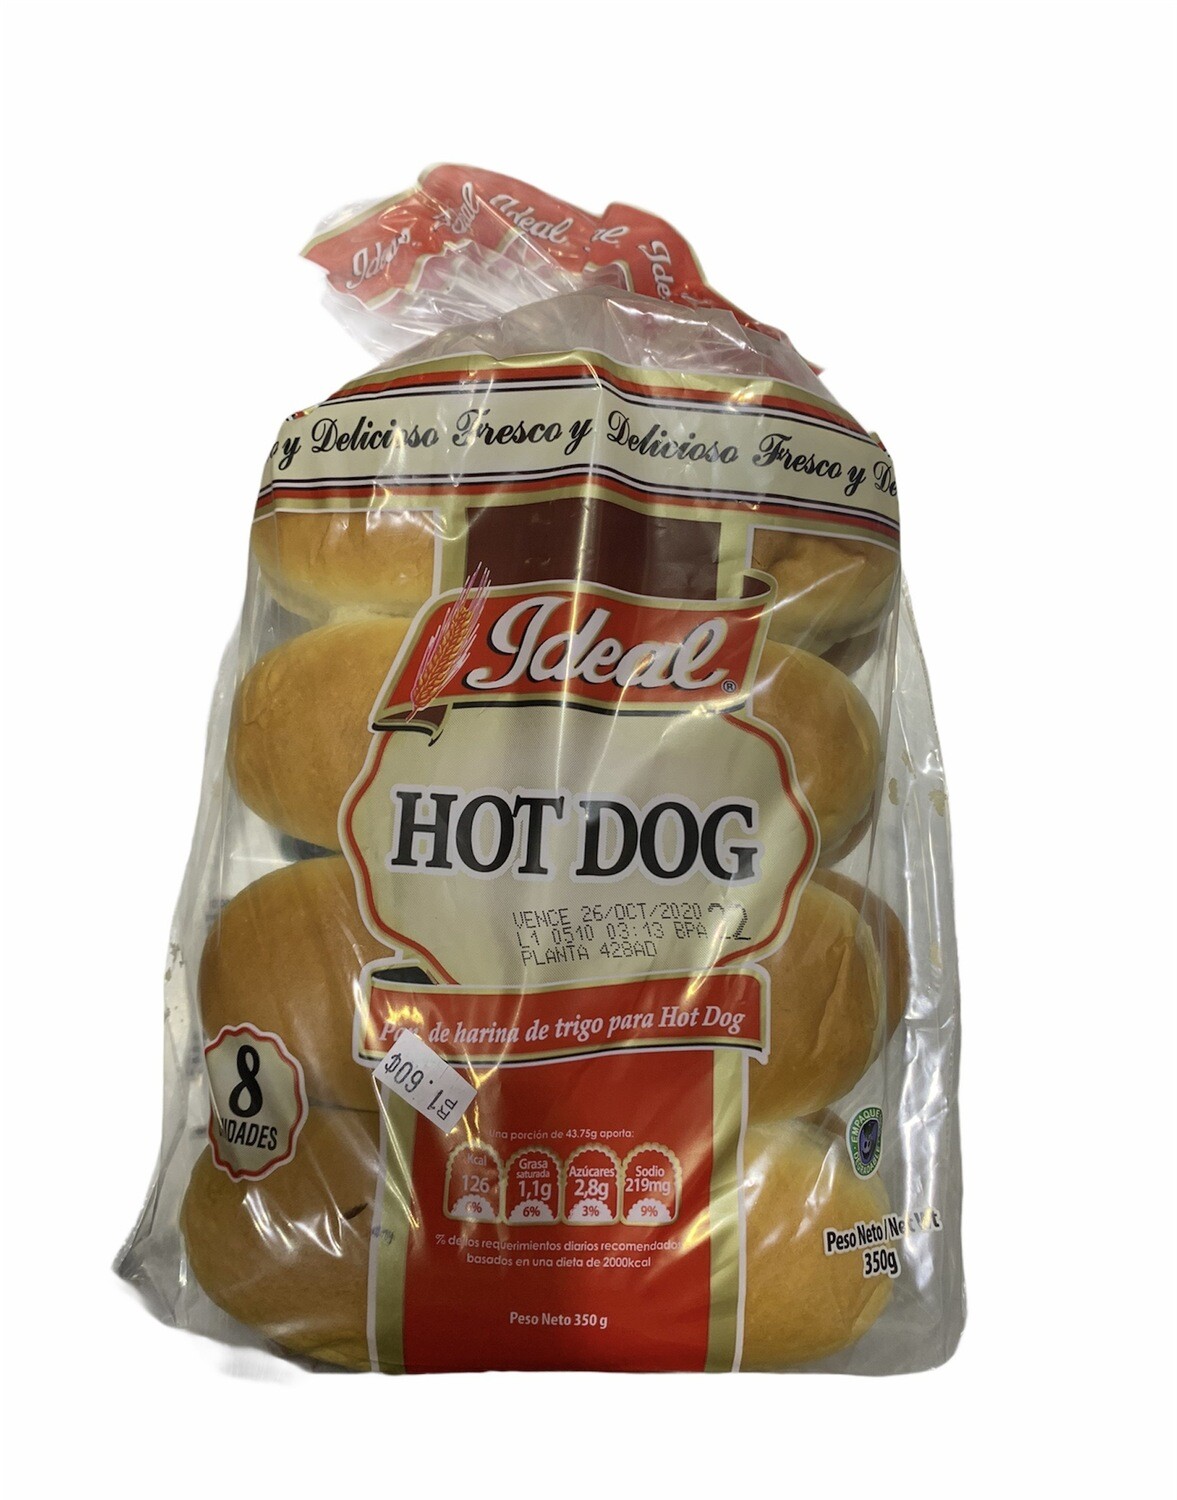 PAN DE HOT DOG IDEAL 8UND